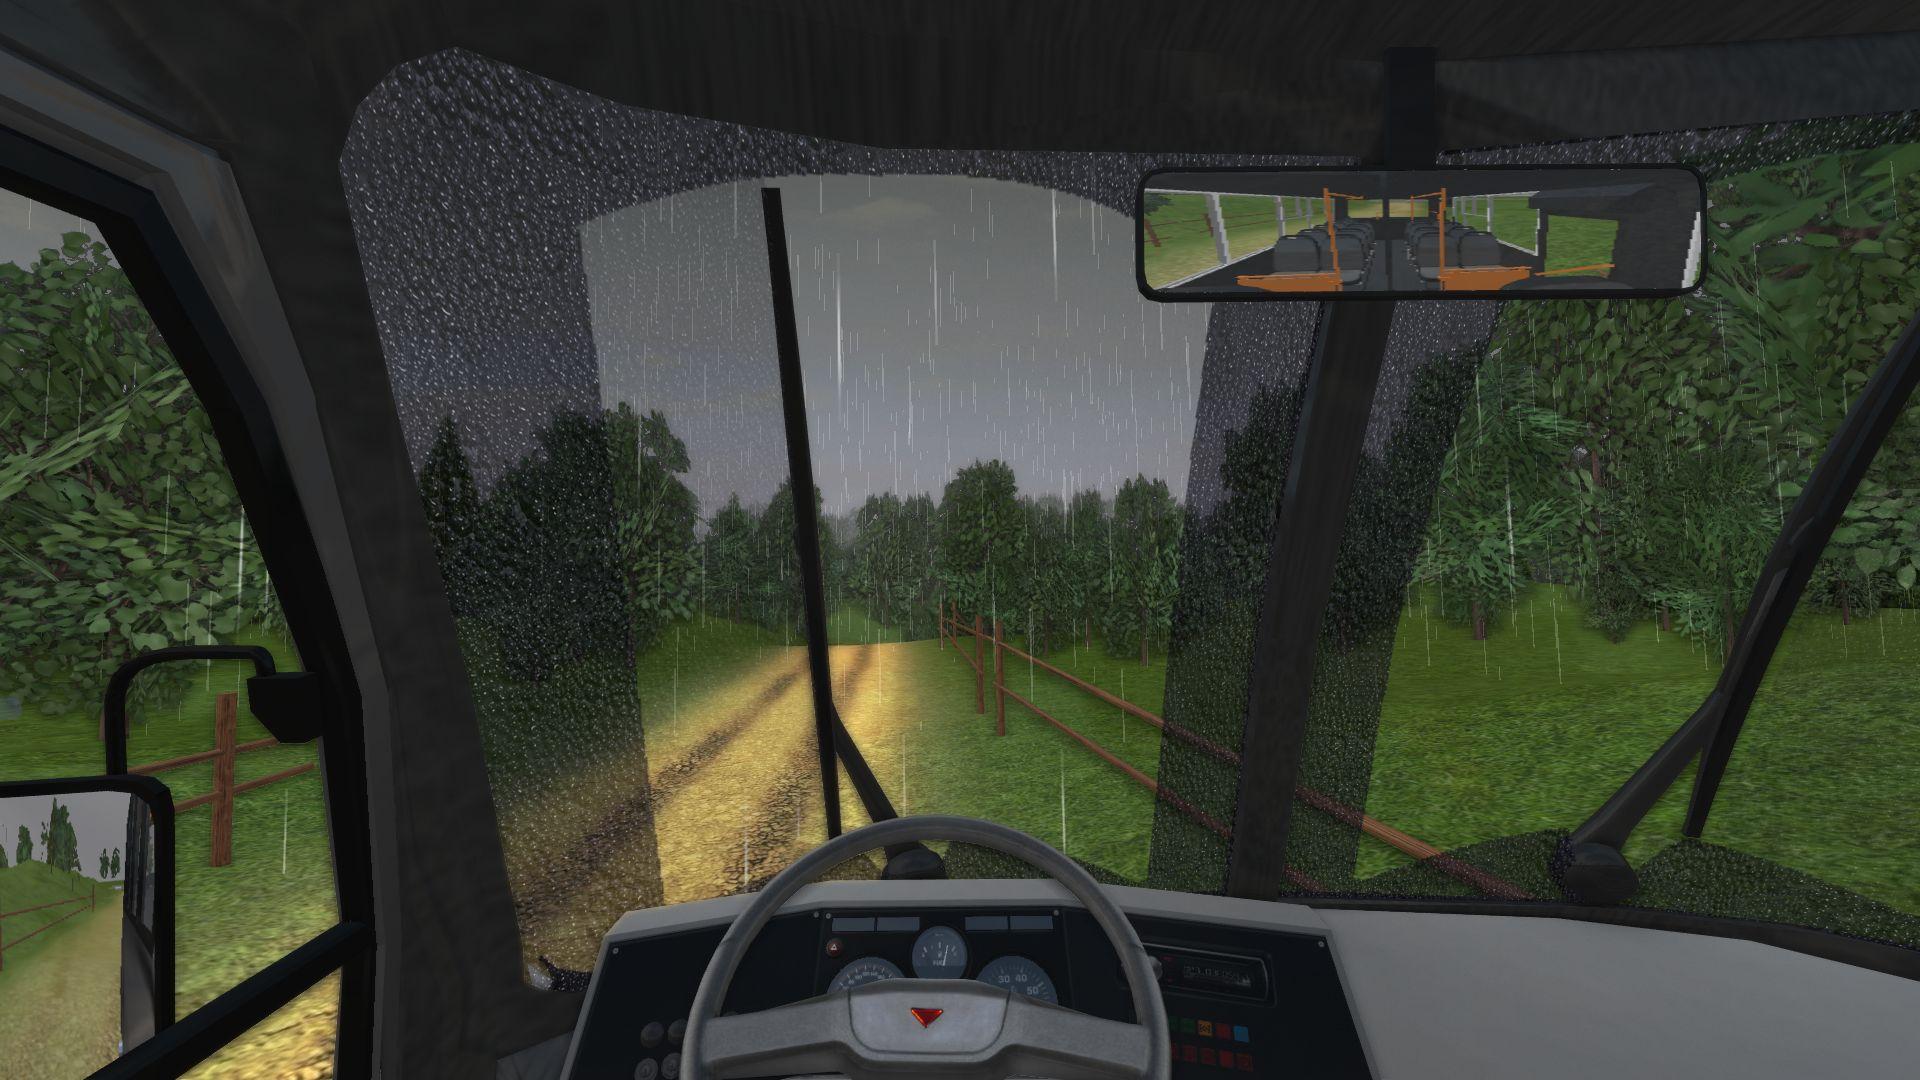 Screenshot №4 from game Drive Megapolis